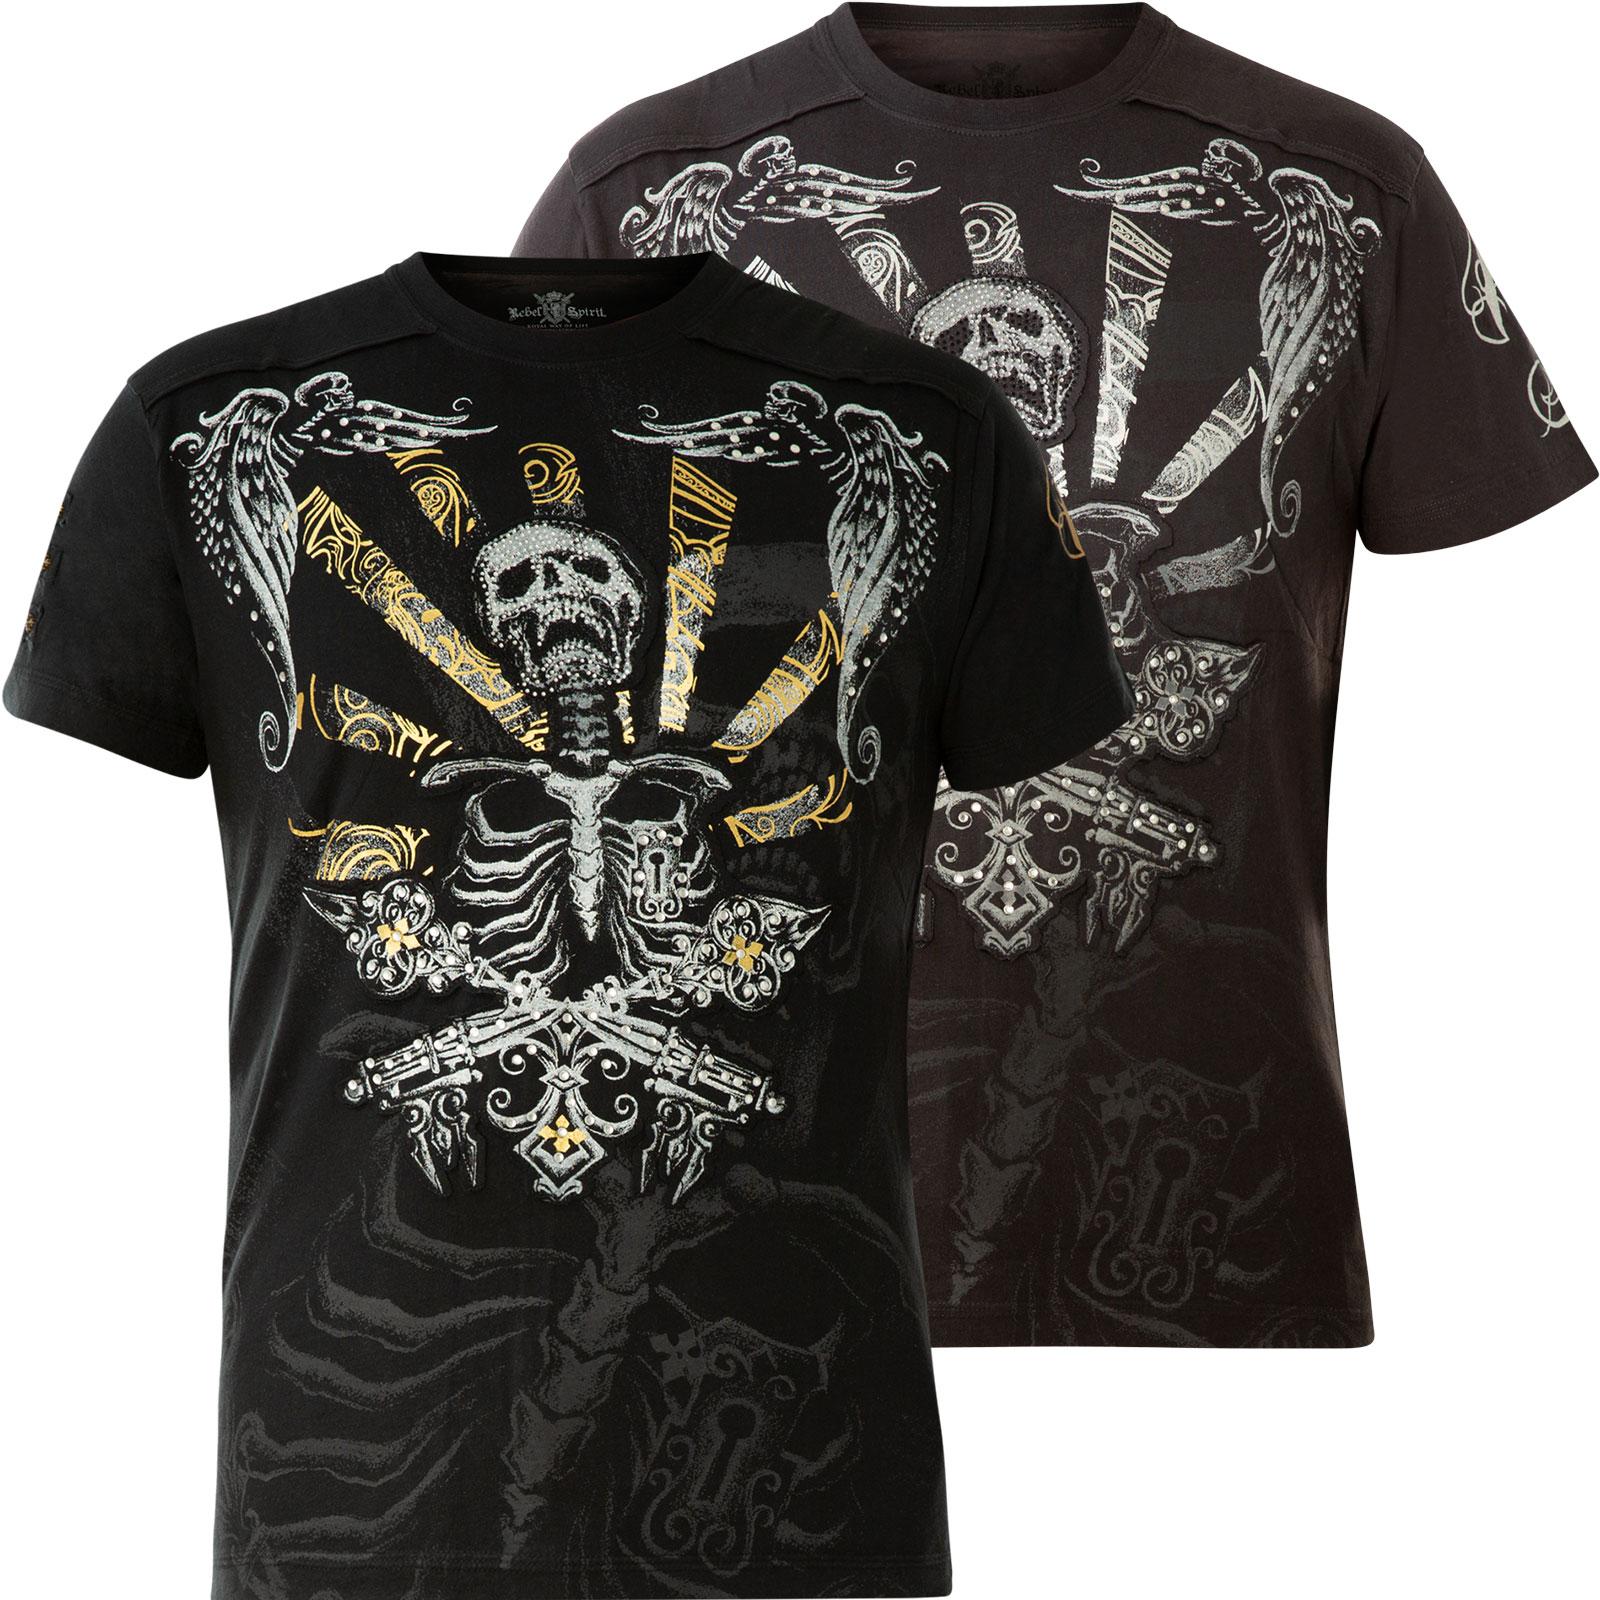 Rebel Spirit T-Shirt SSK111148 in black with elaborate print designs ...